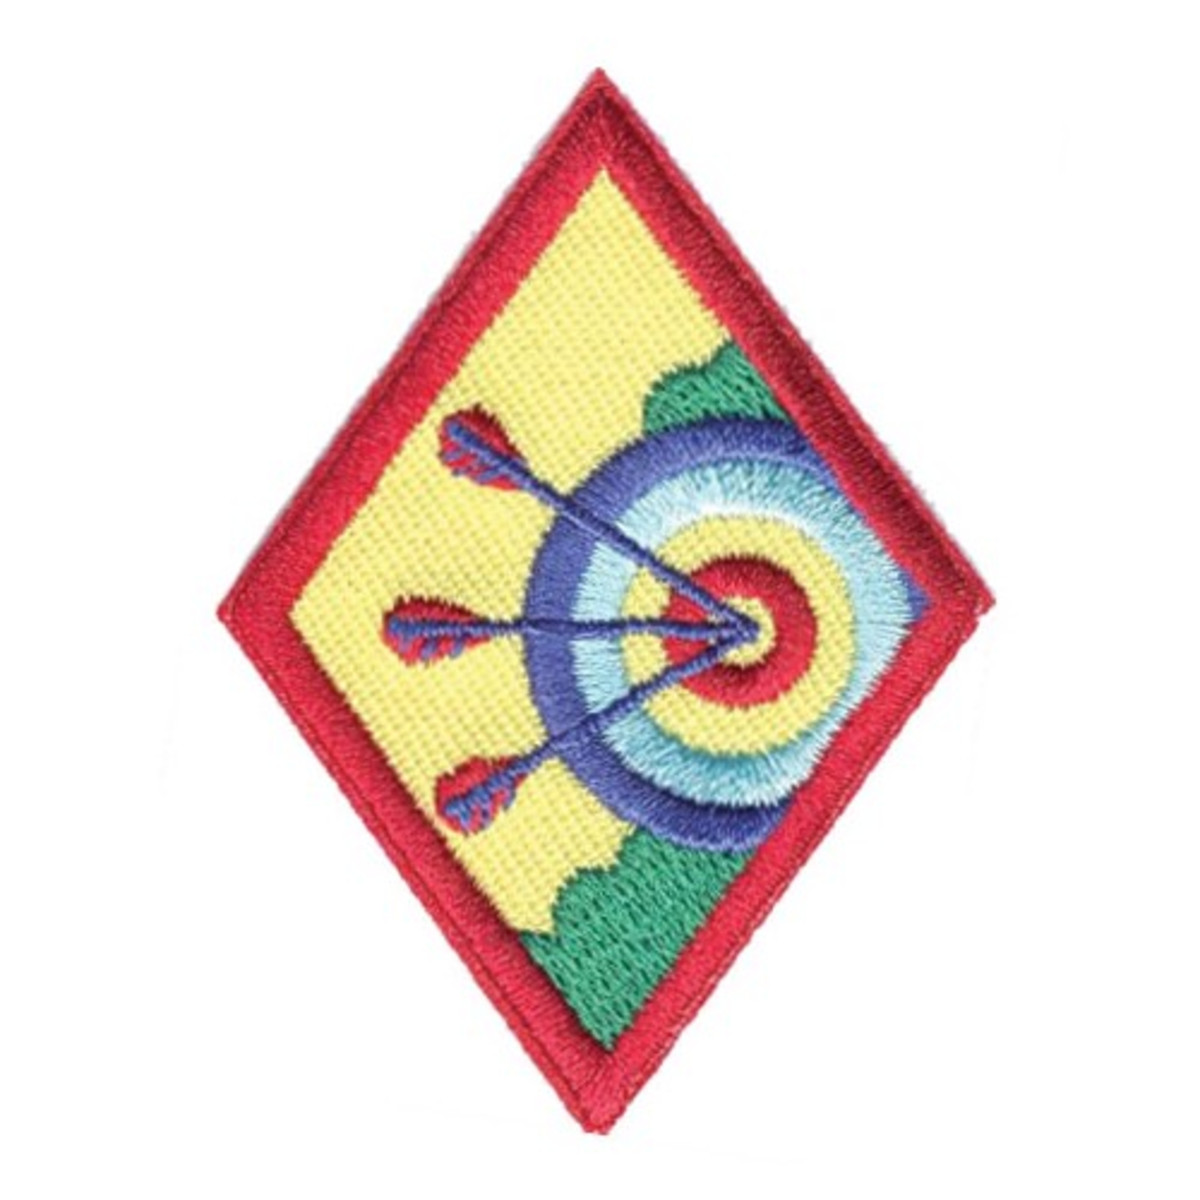 Archery Badge